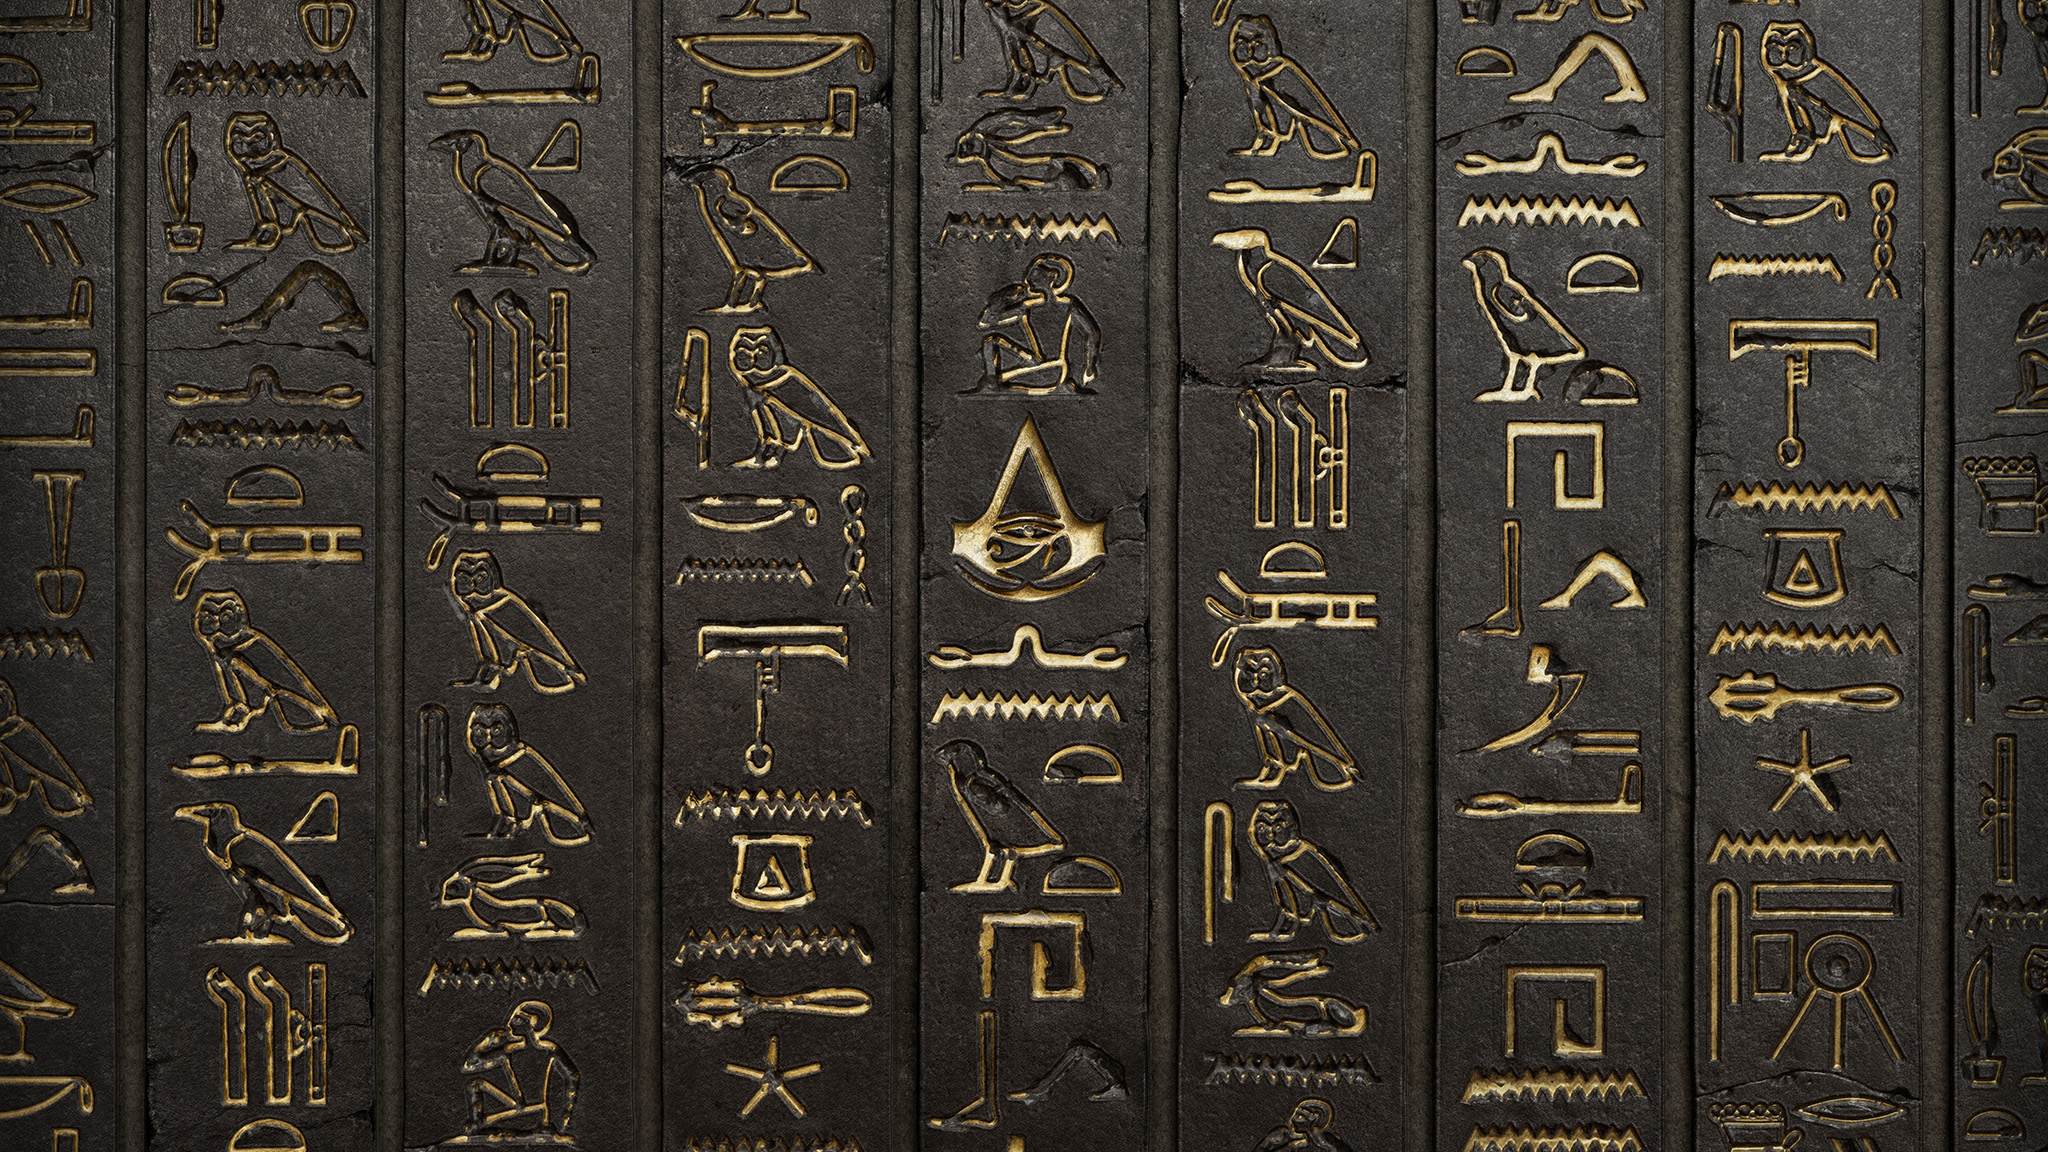 Assassins Creed, Hieroglyphs, Wall, Video games, Digital art, Assassins Creed: Origins Wallpaper